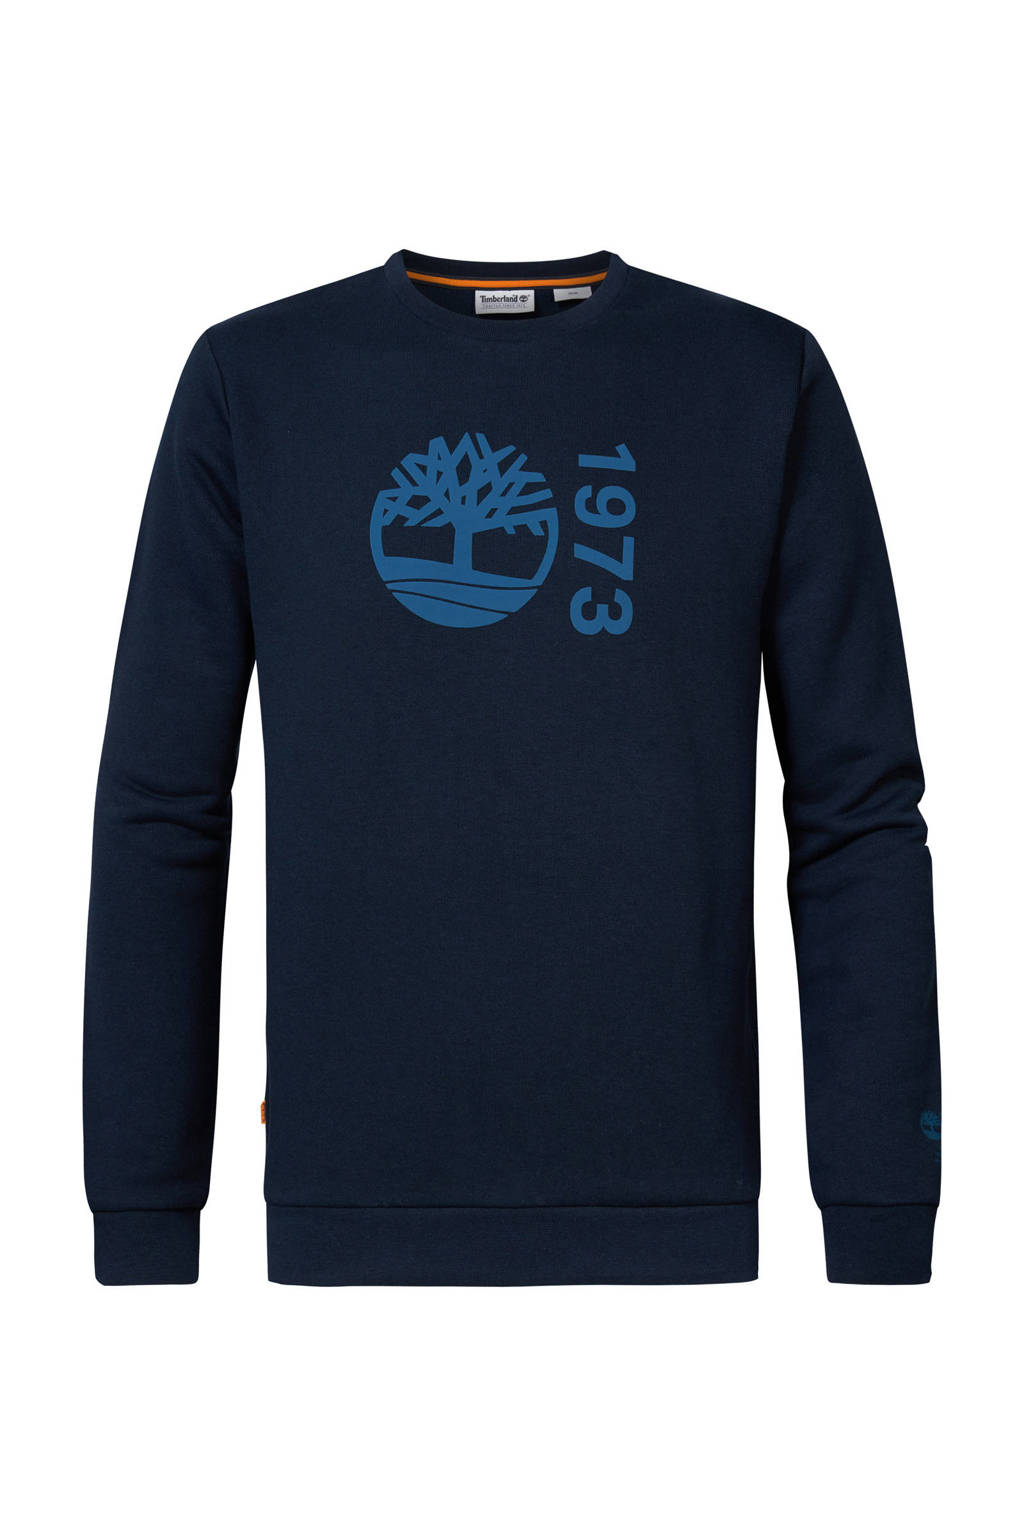 Timberland sweater met printopdruk marine, Marine